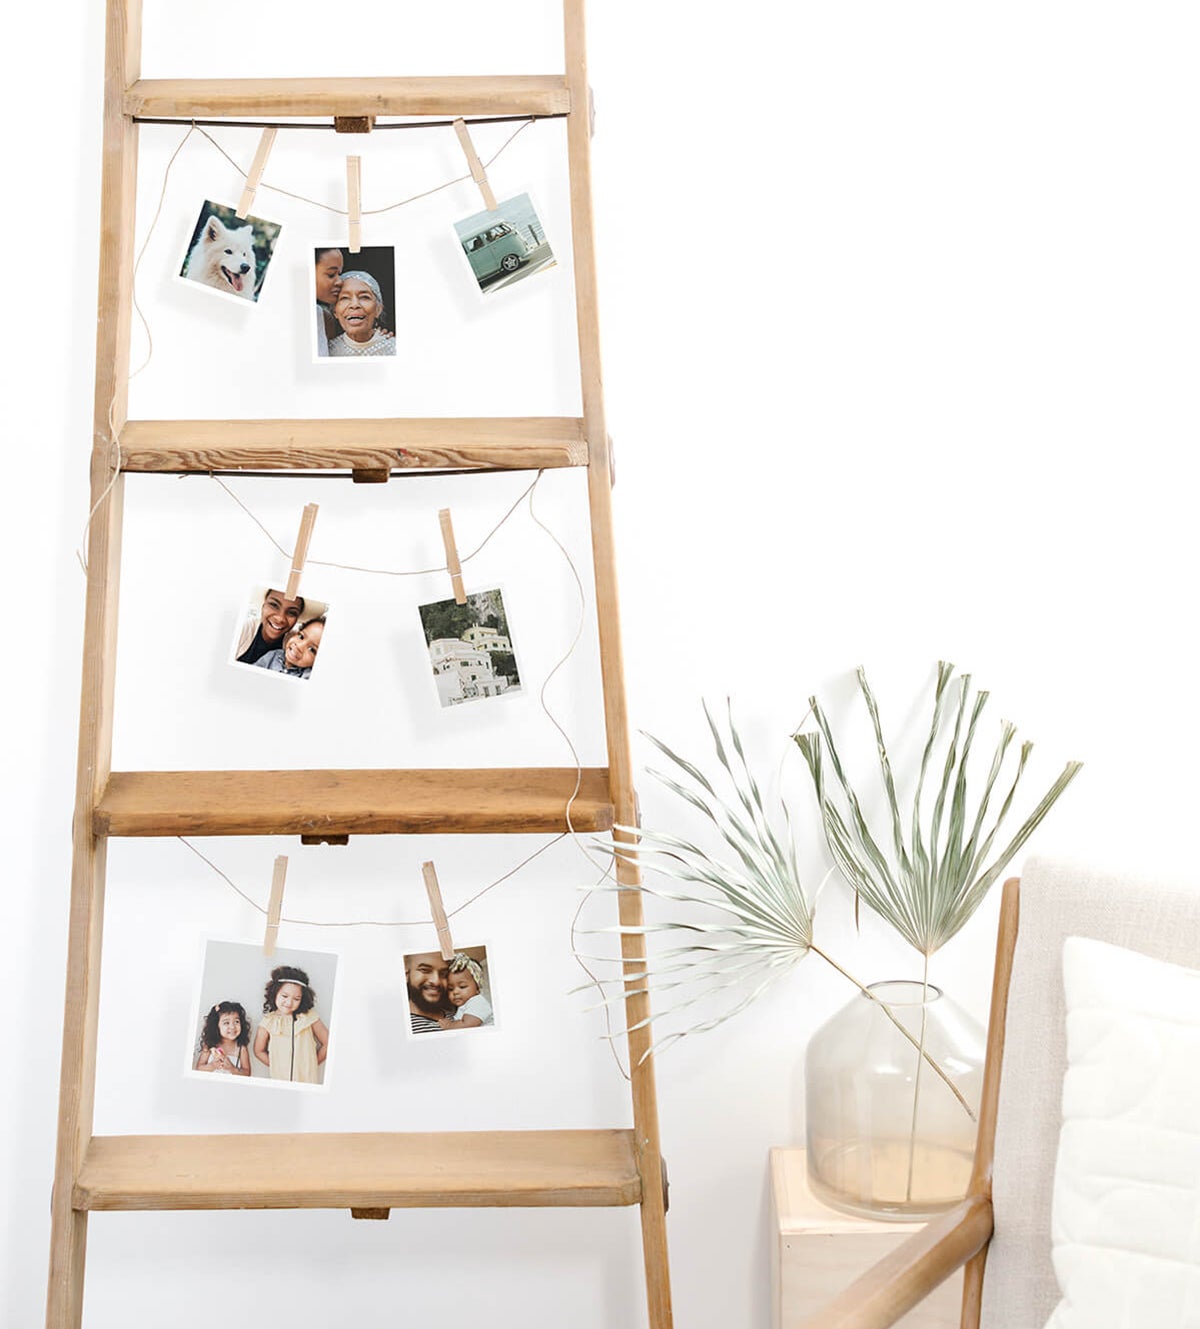 Wooden ladder repurposed to display photo prints